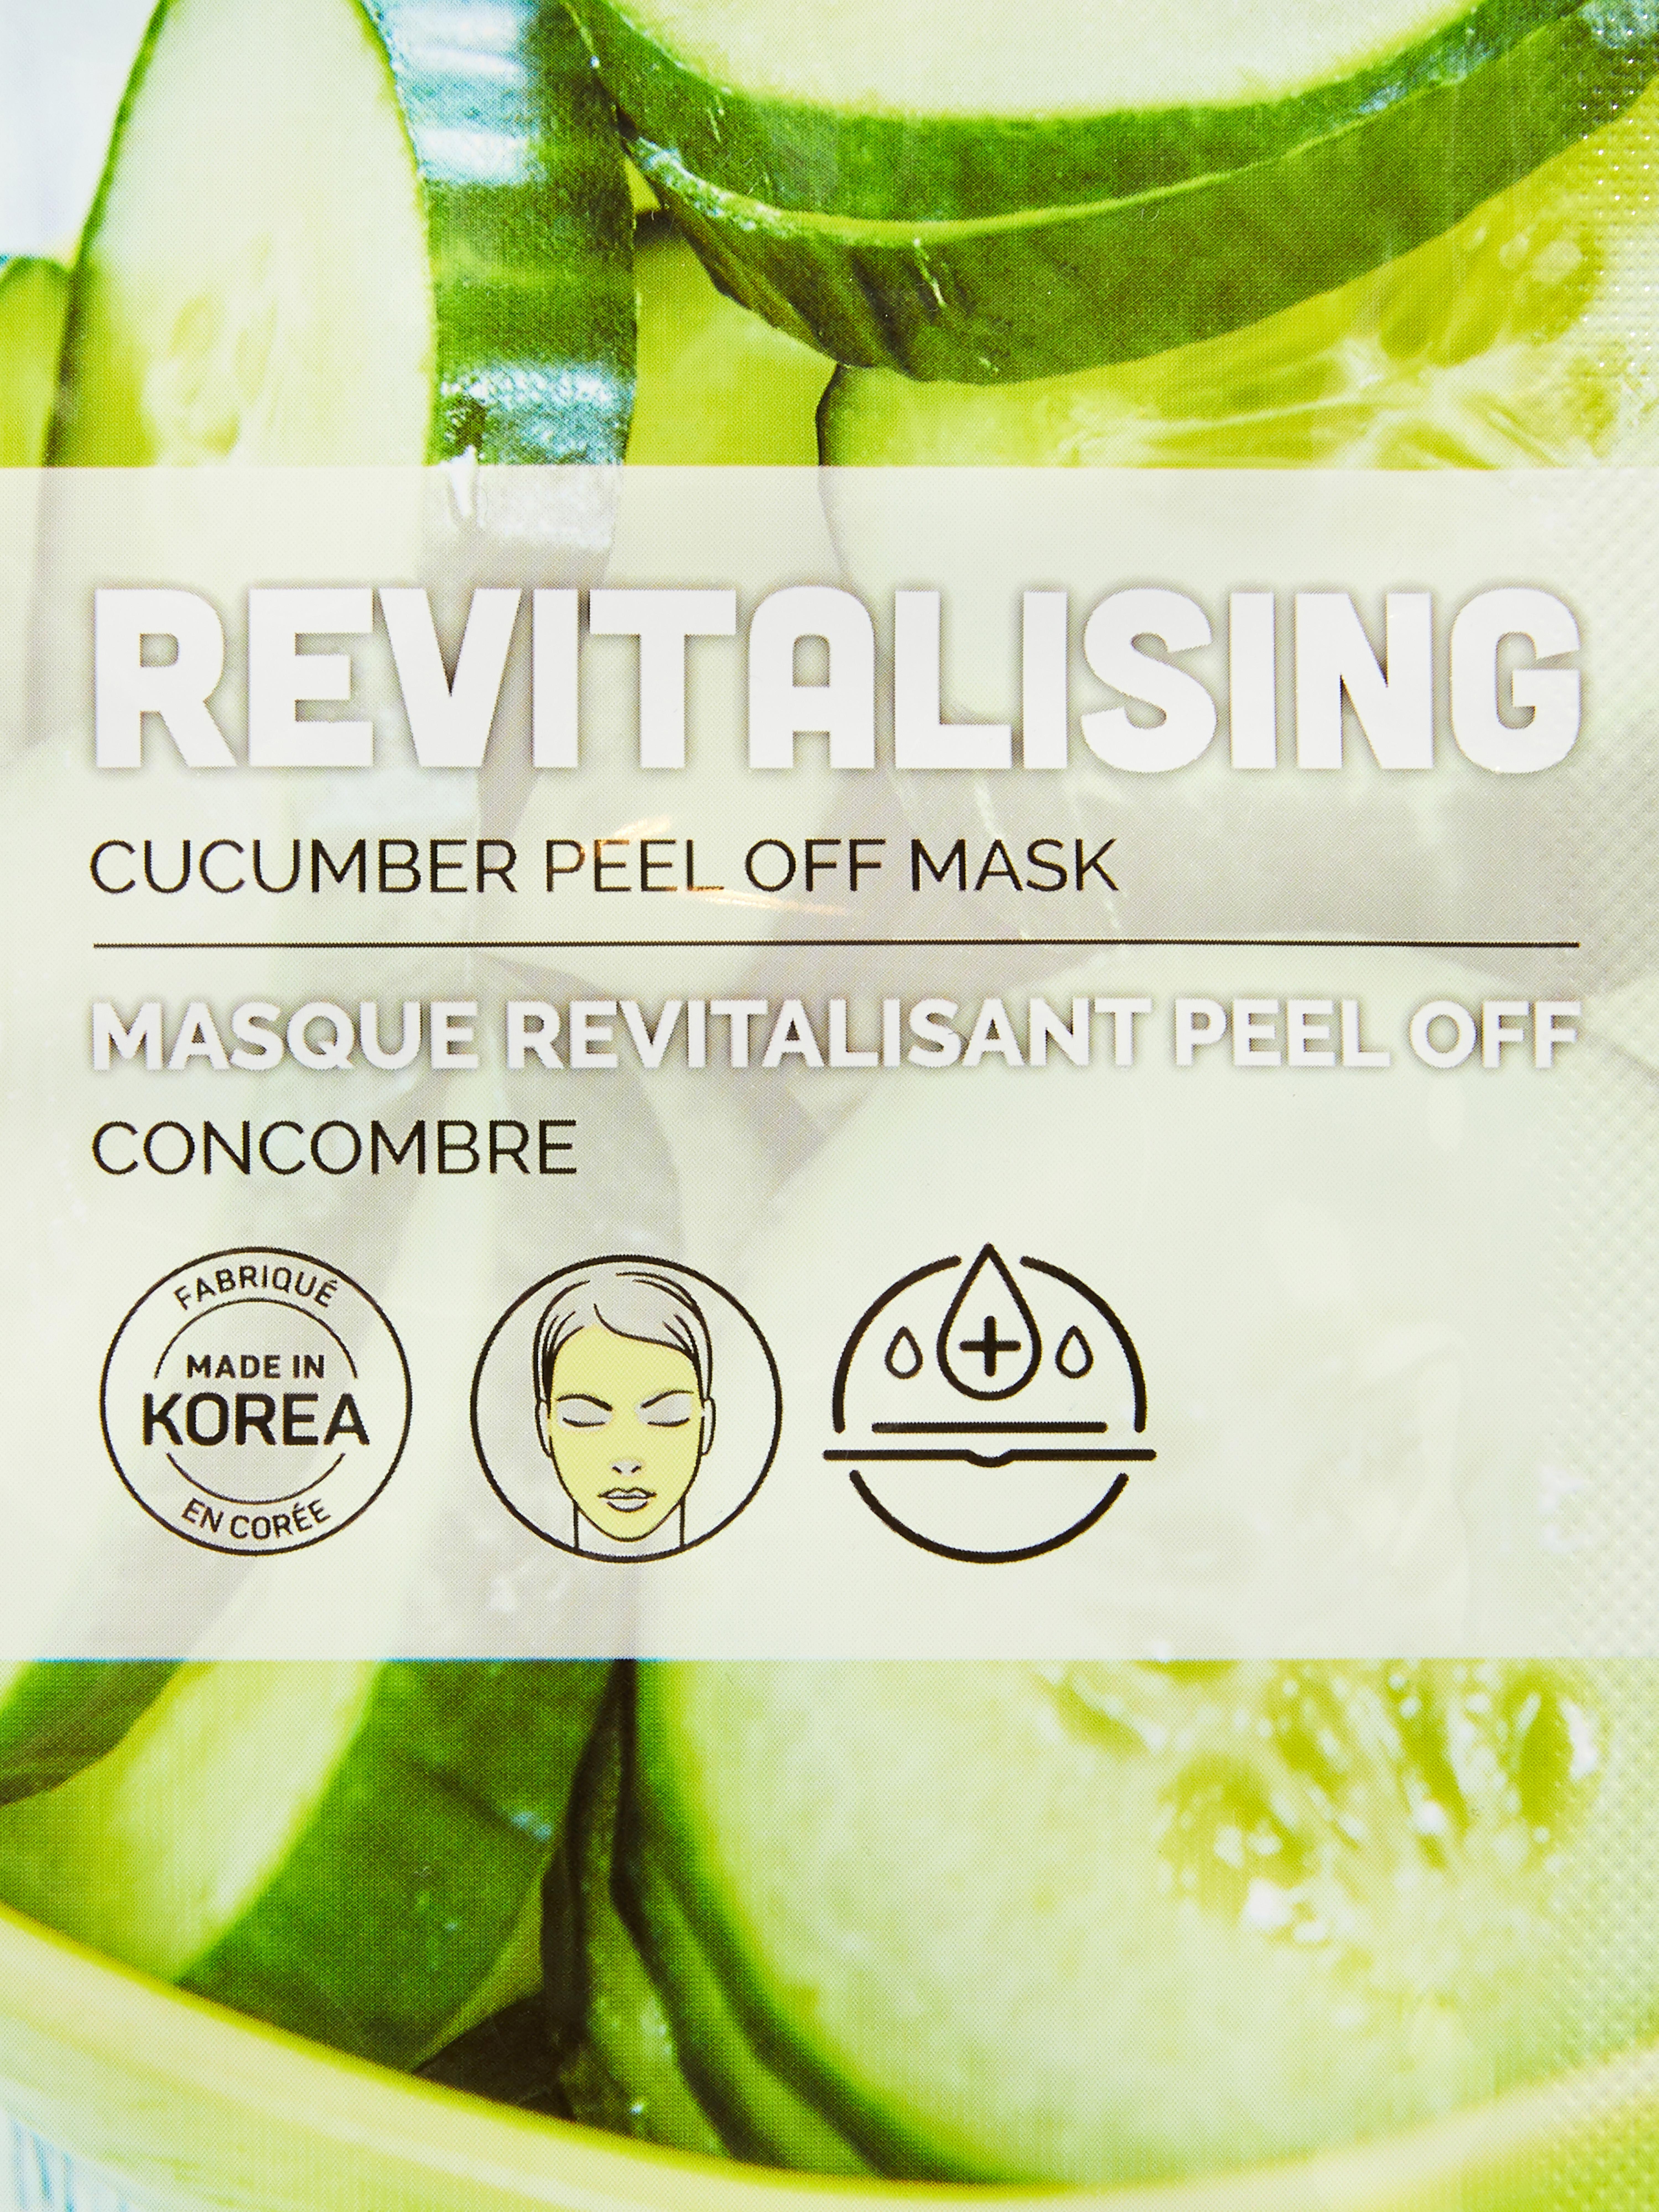 PS... Cucumber Peel Mask